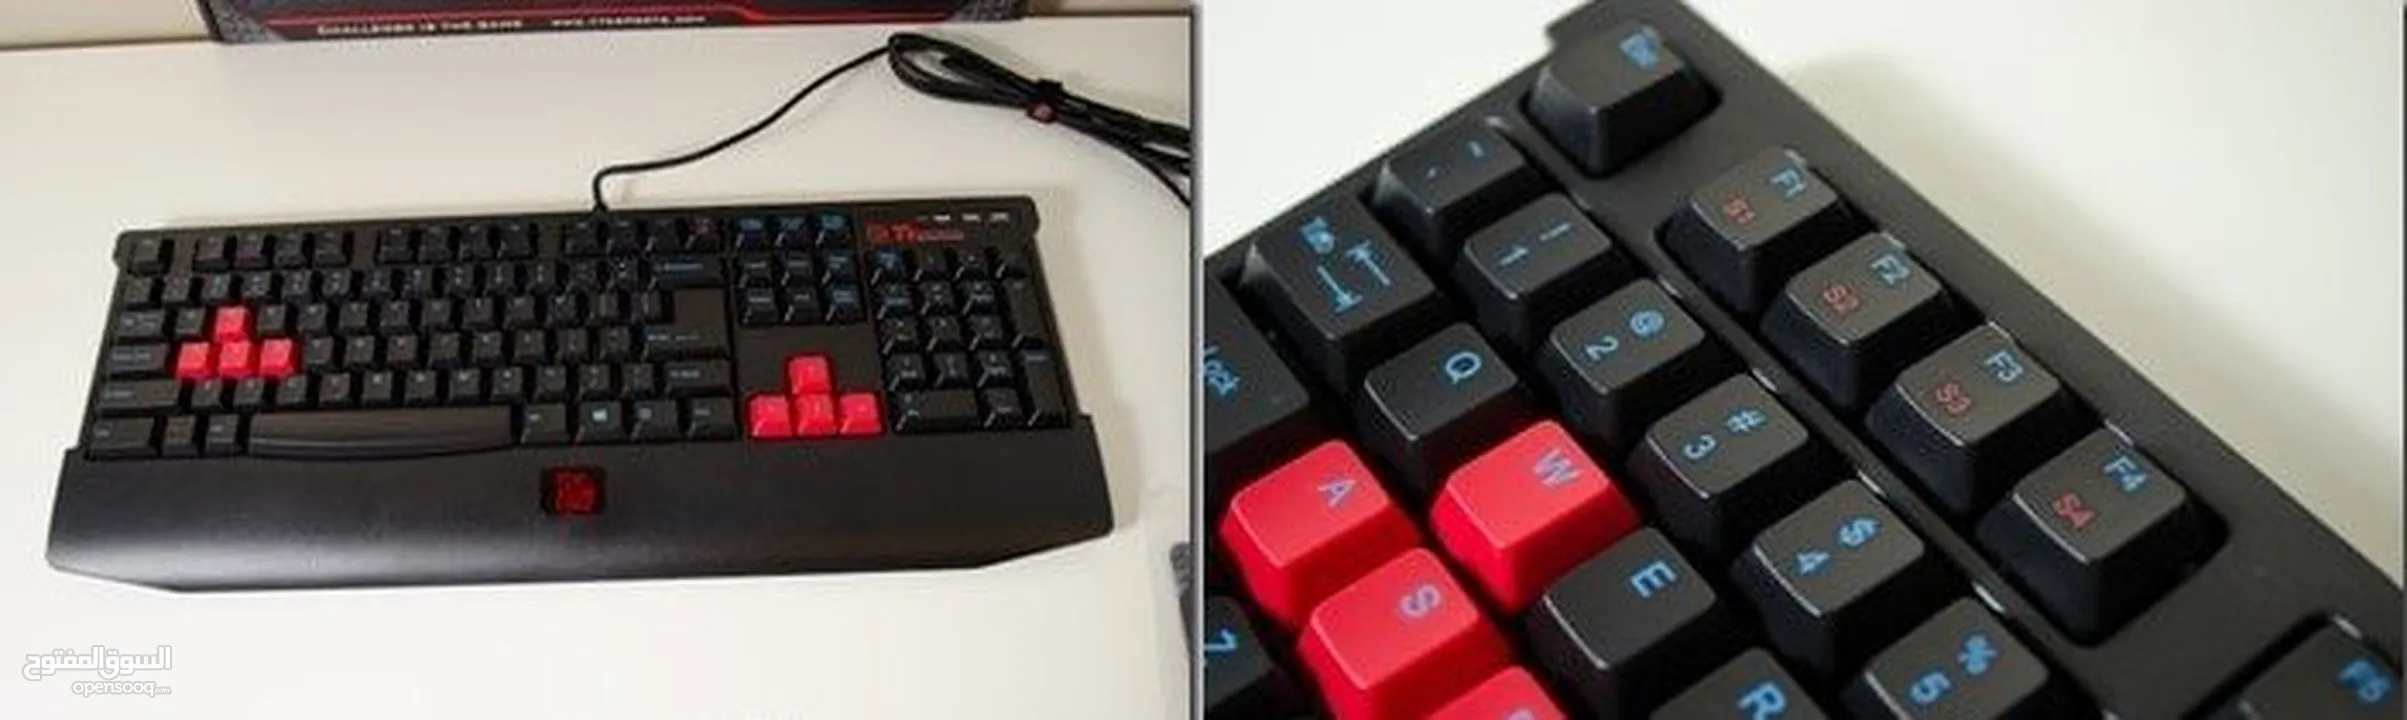 Tt eSPORTS Knucker Plunger Gaming Keyboard